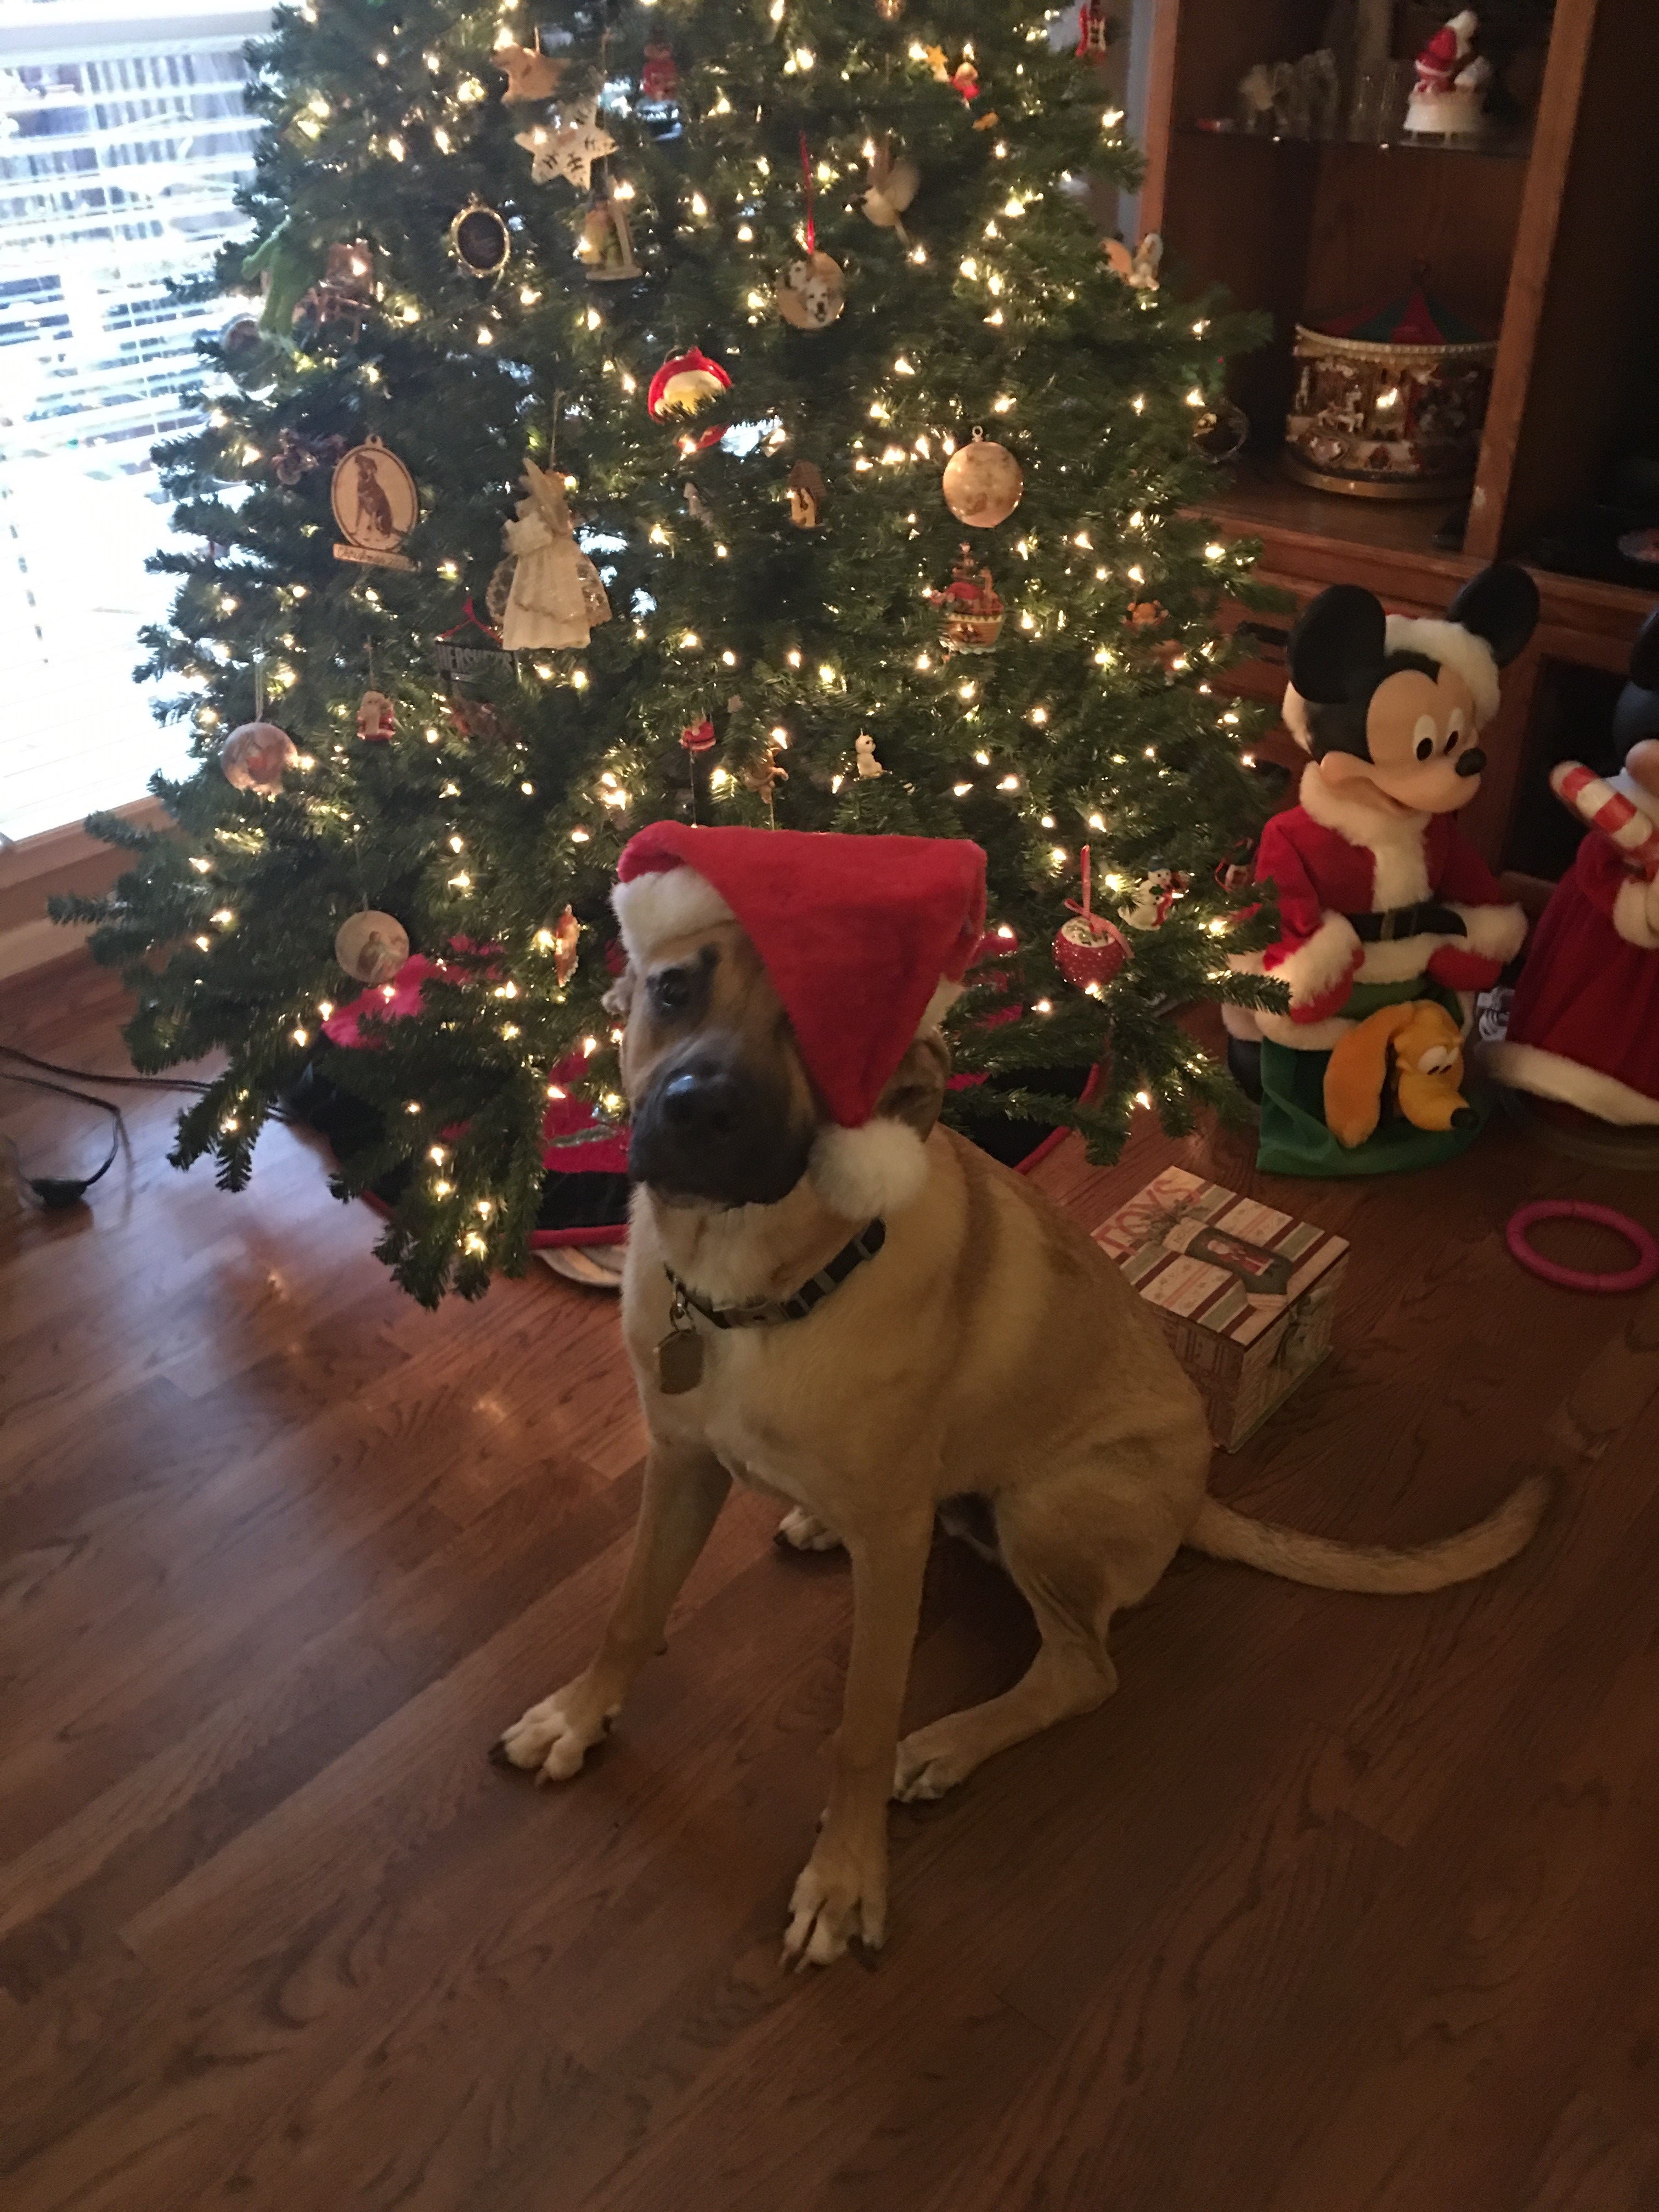 dog with Santa hat